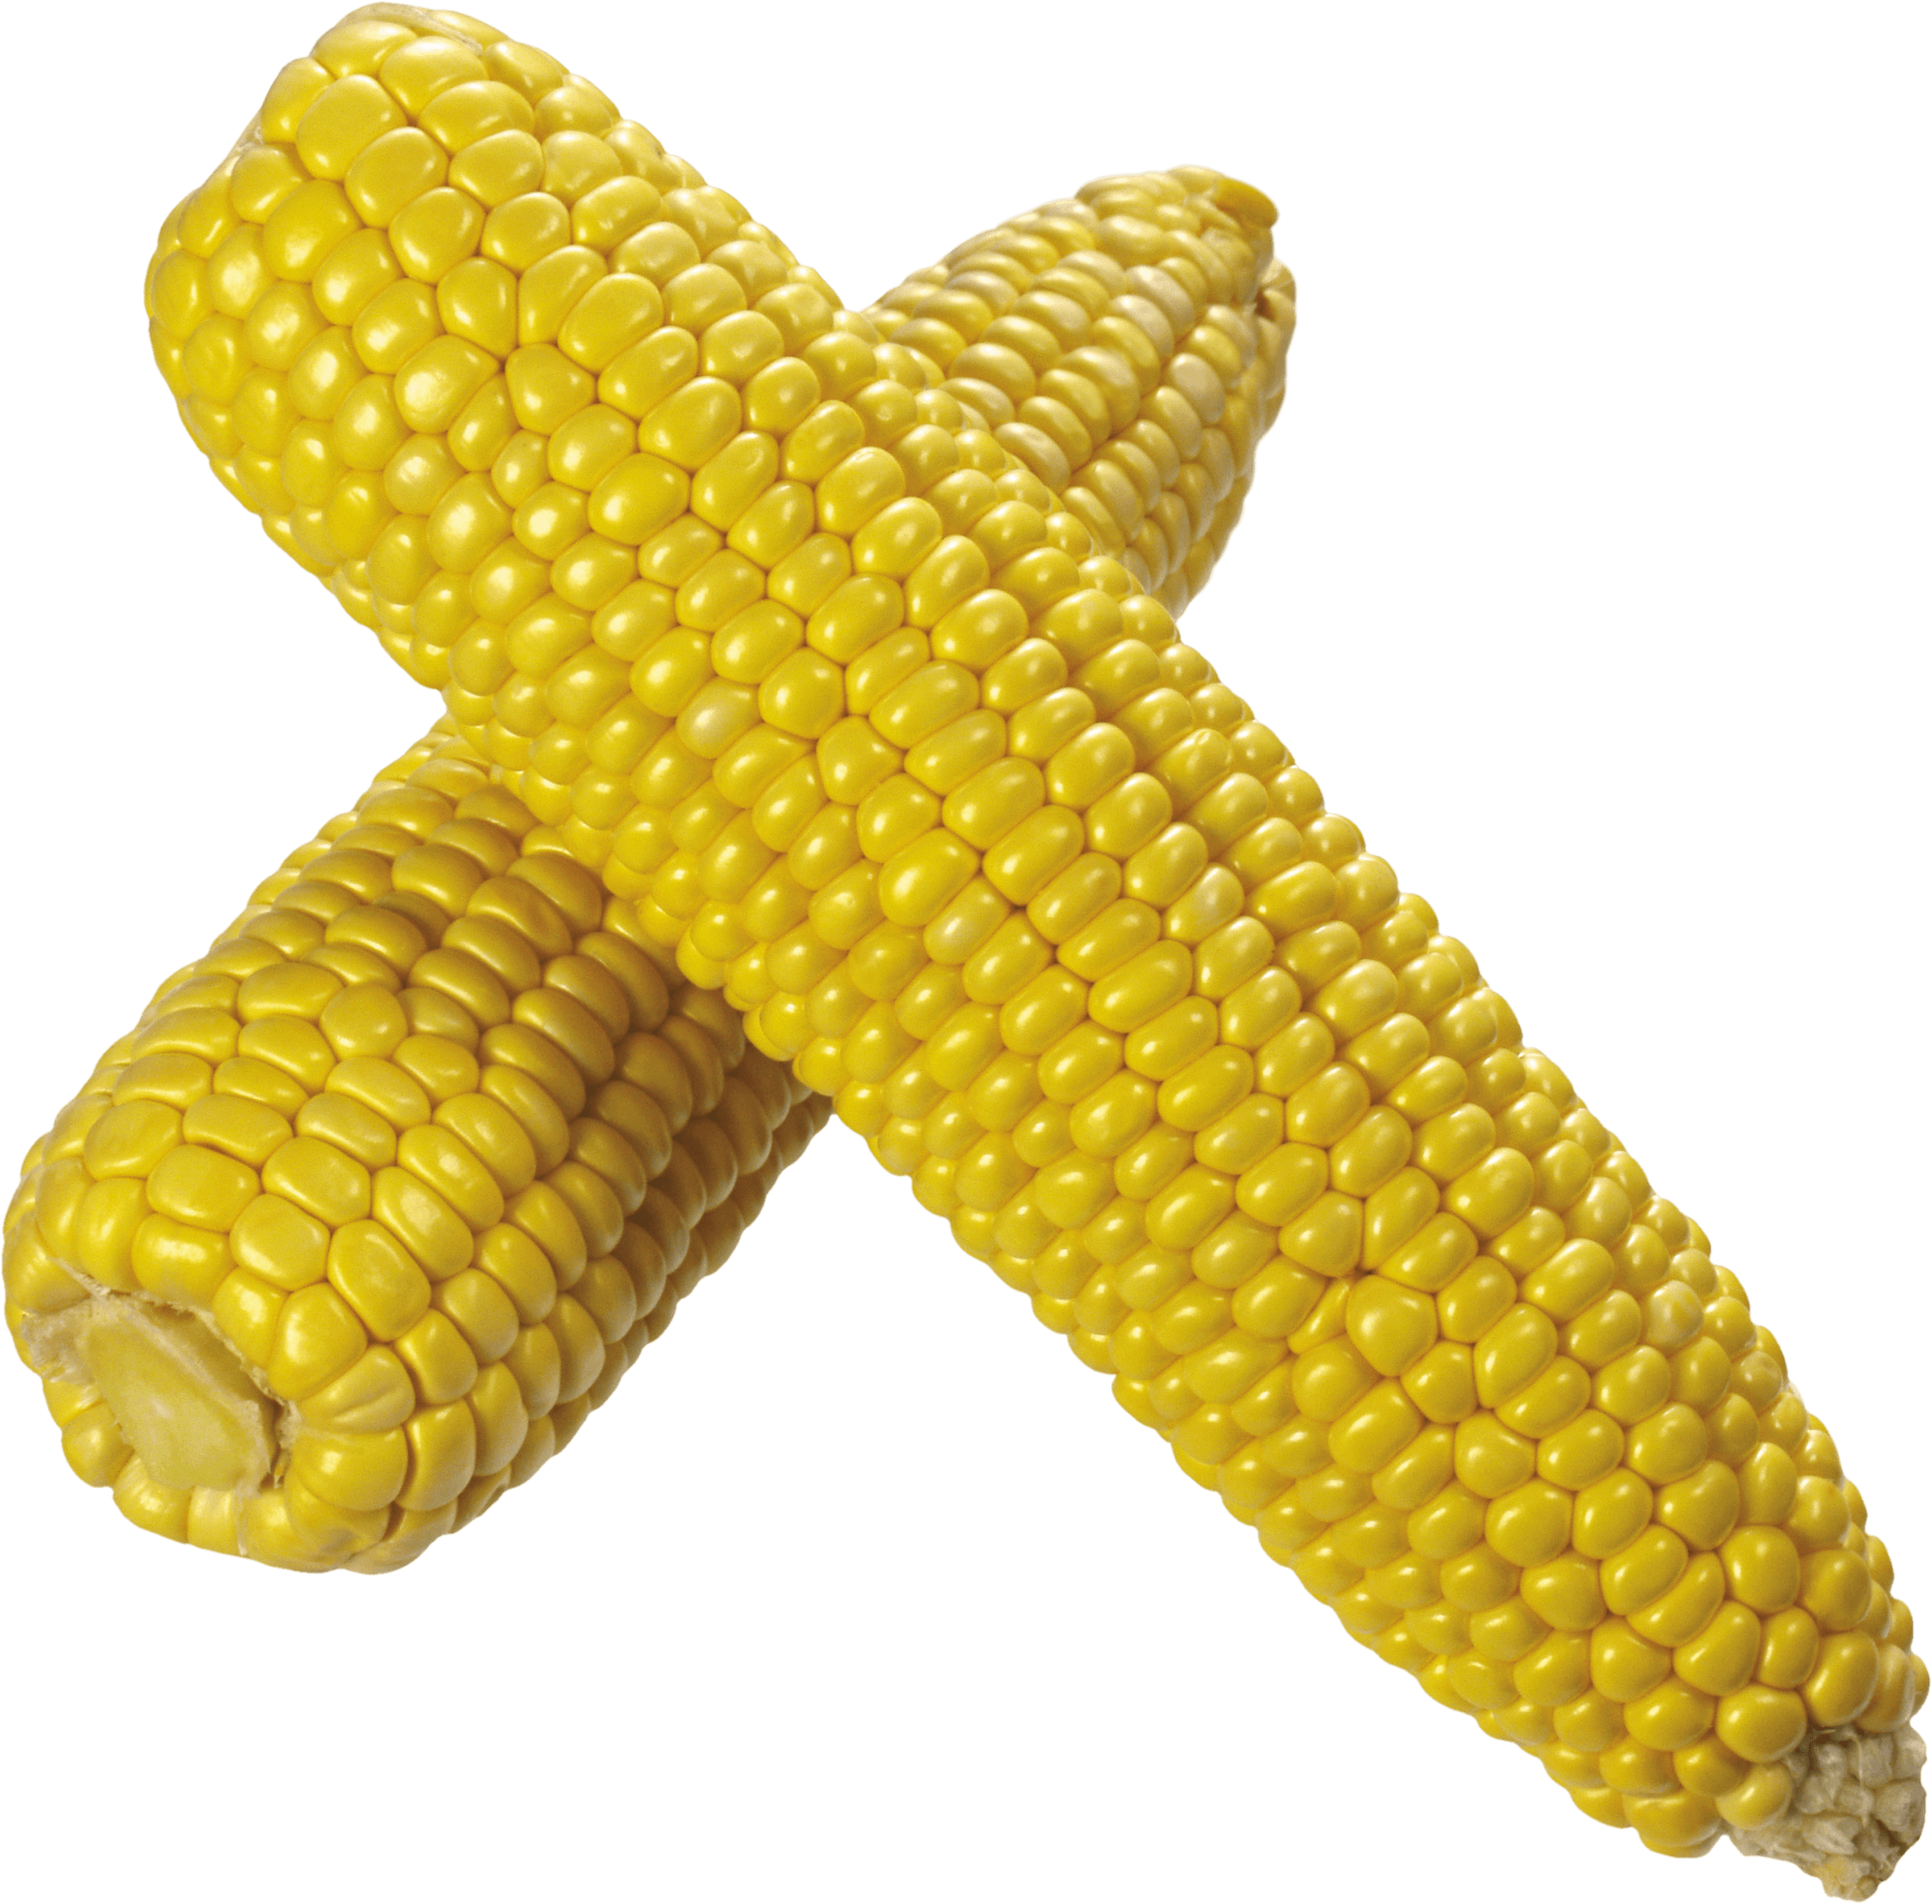 corn clipart corn seed